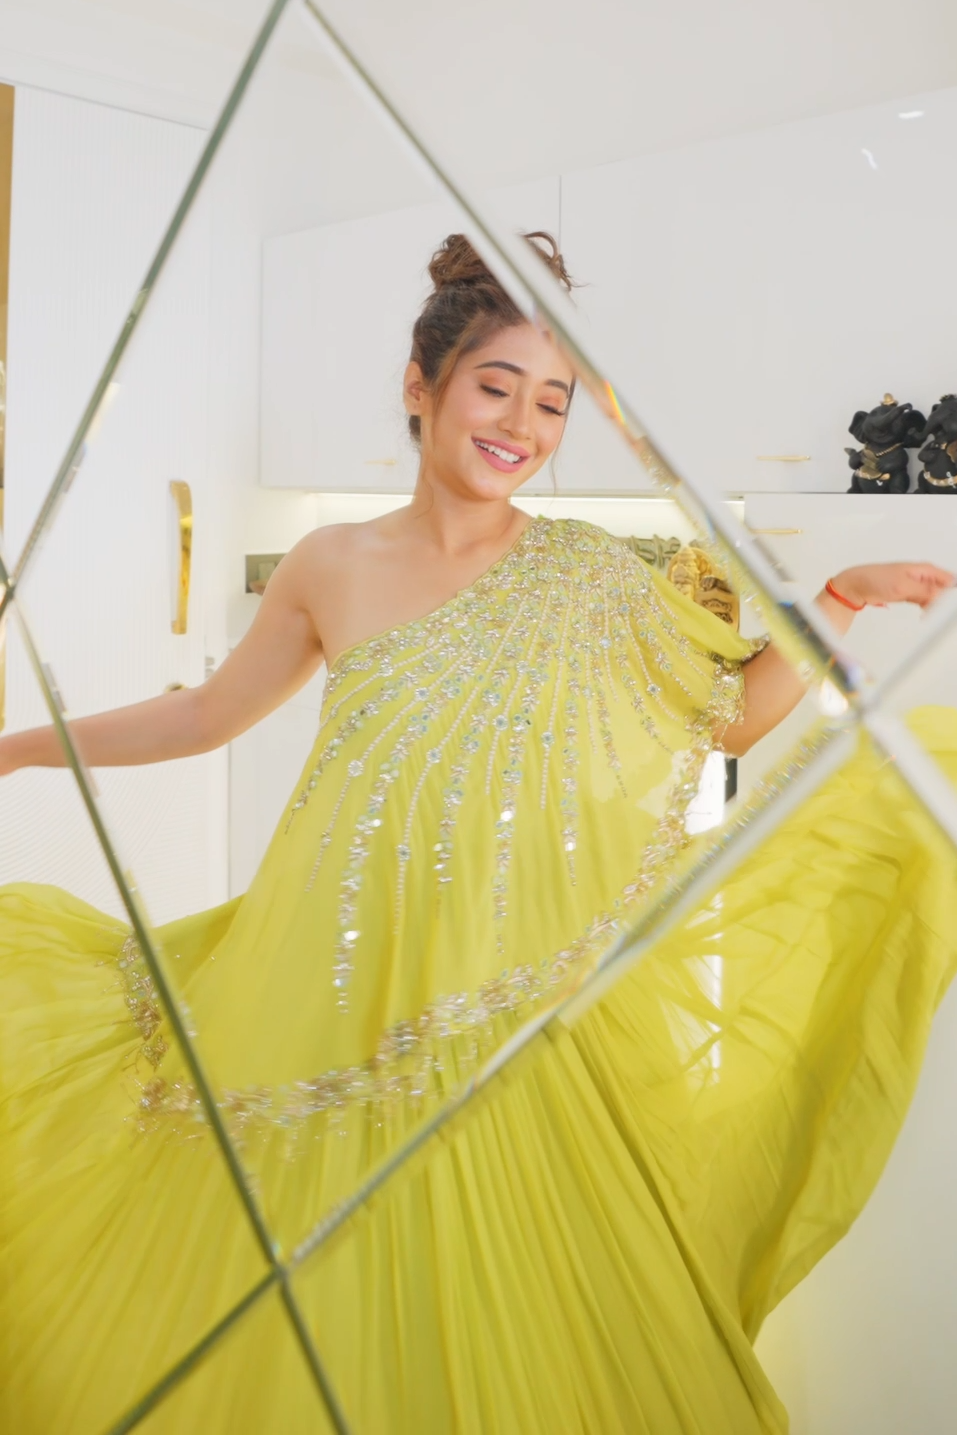 Shivangi Joshi's off-the-shoulder dress is a truly high fashion